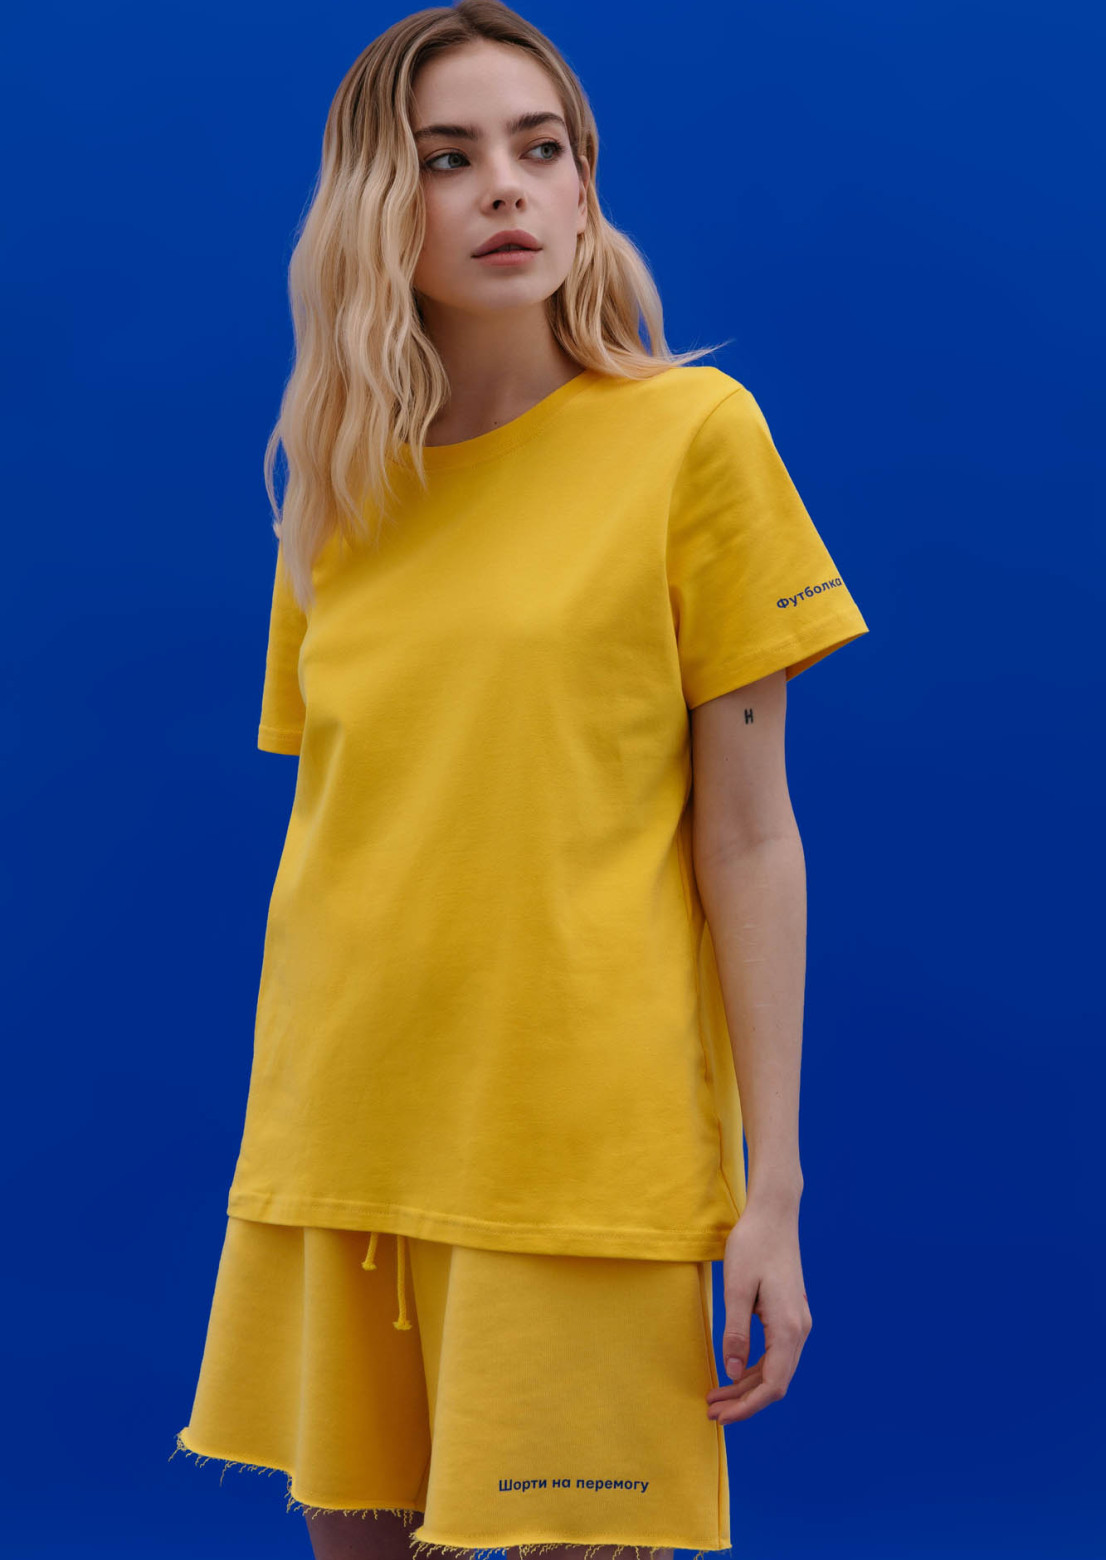 Women's yellow color T-shirt "На Перемогу"